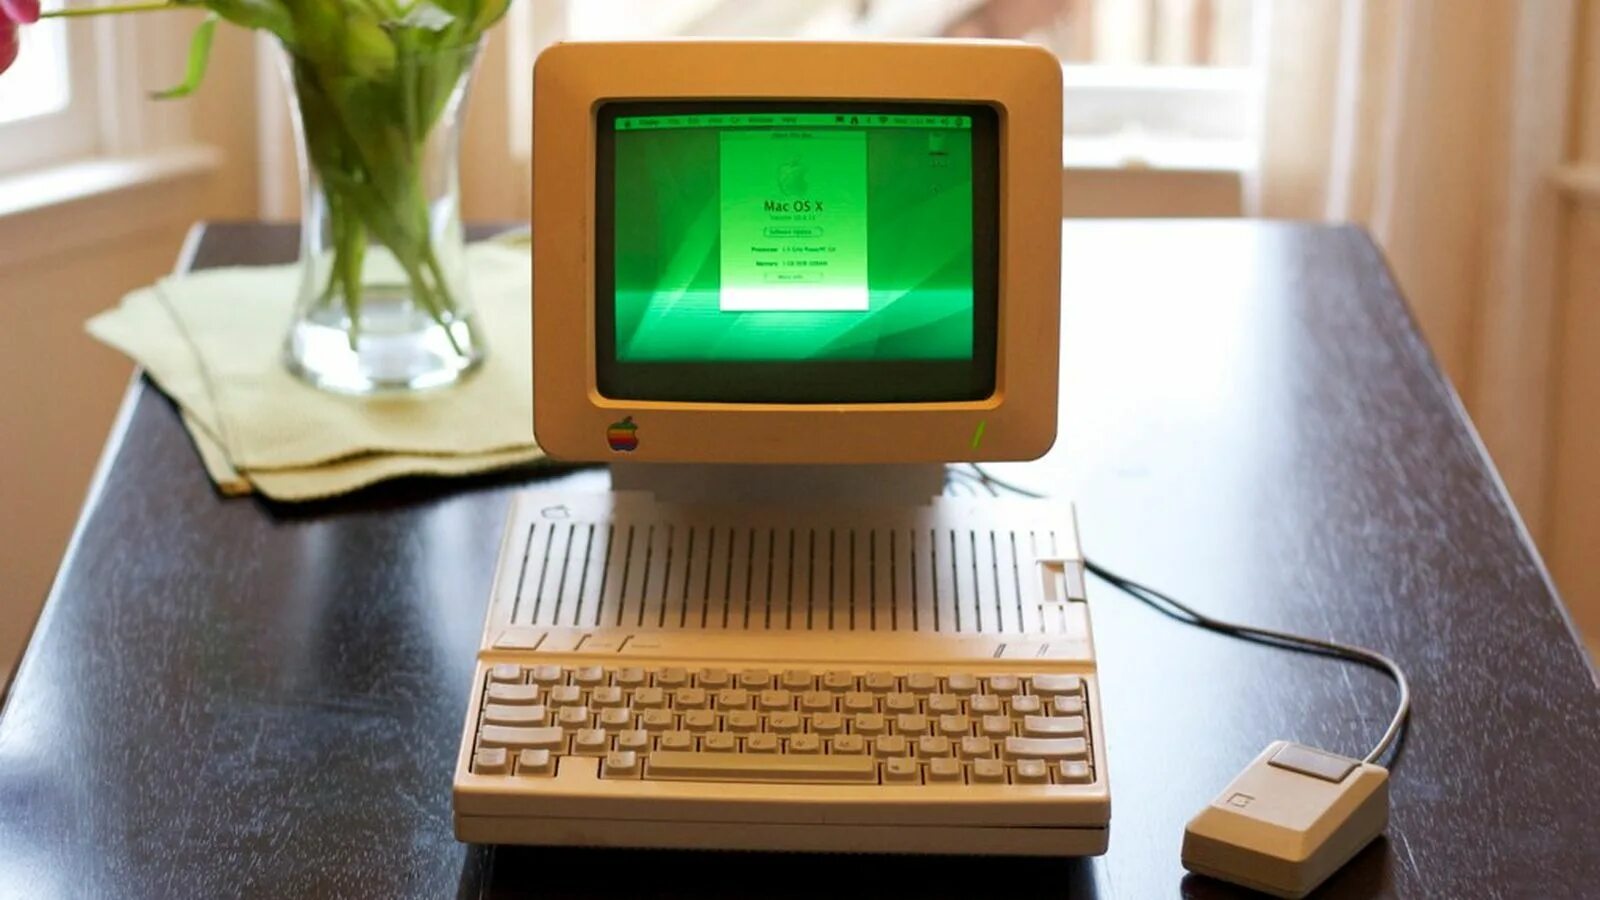 Old computer. Макинтош компьютер Apple 2000. Примитивный компьютер. Устаревший компьютер. Компьютер картинка.